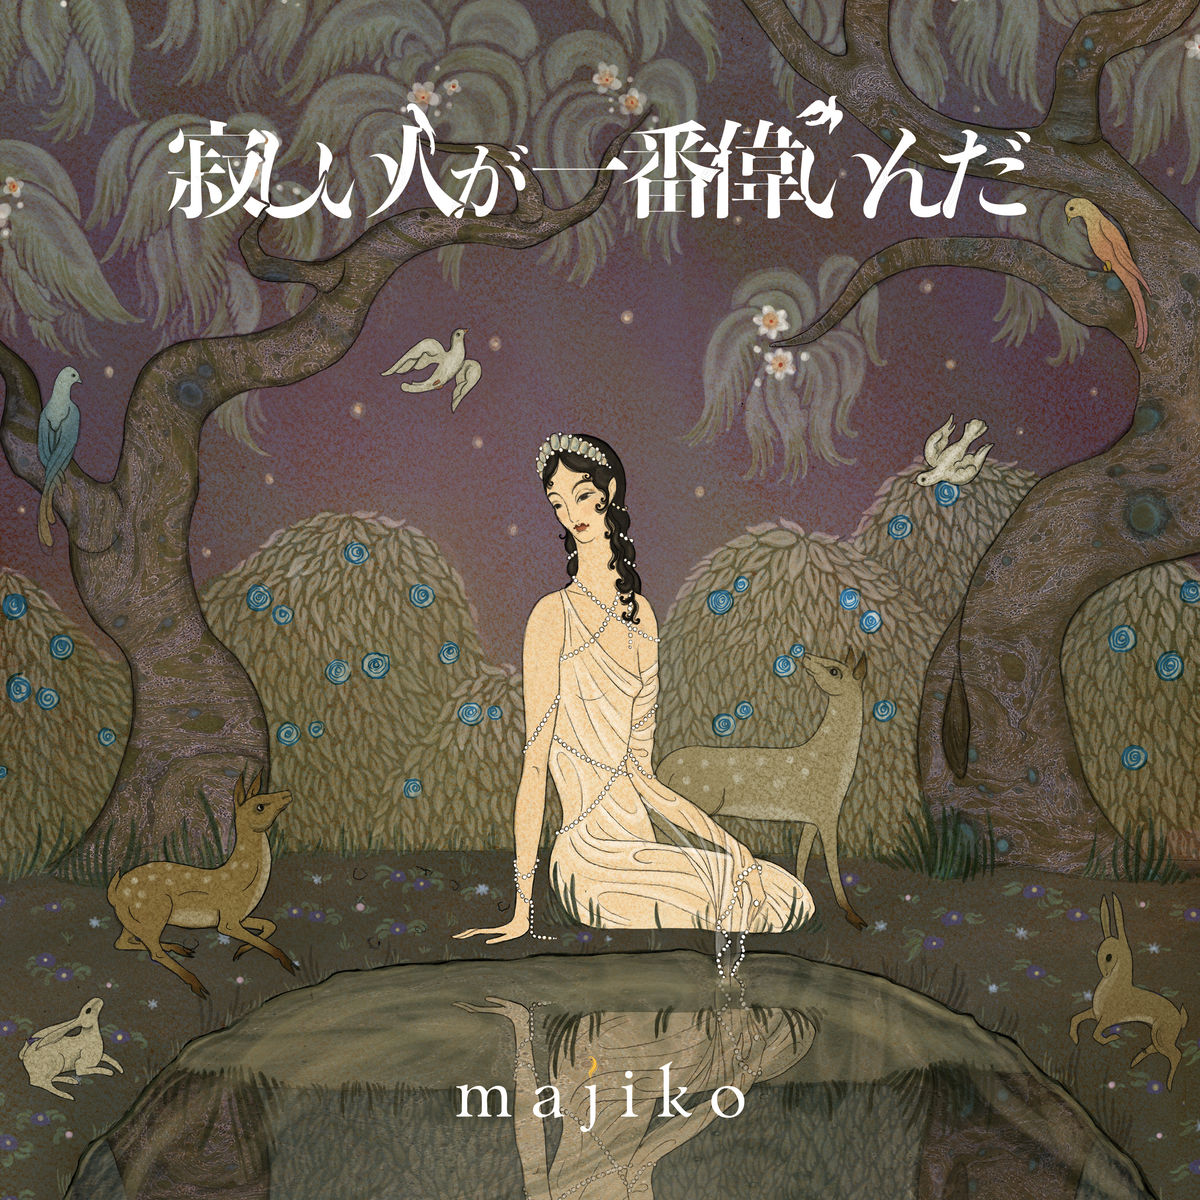 Cover art for『majiko - WISH』from the release『Sabishii Hito ga Ichiban Erain da』